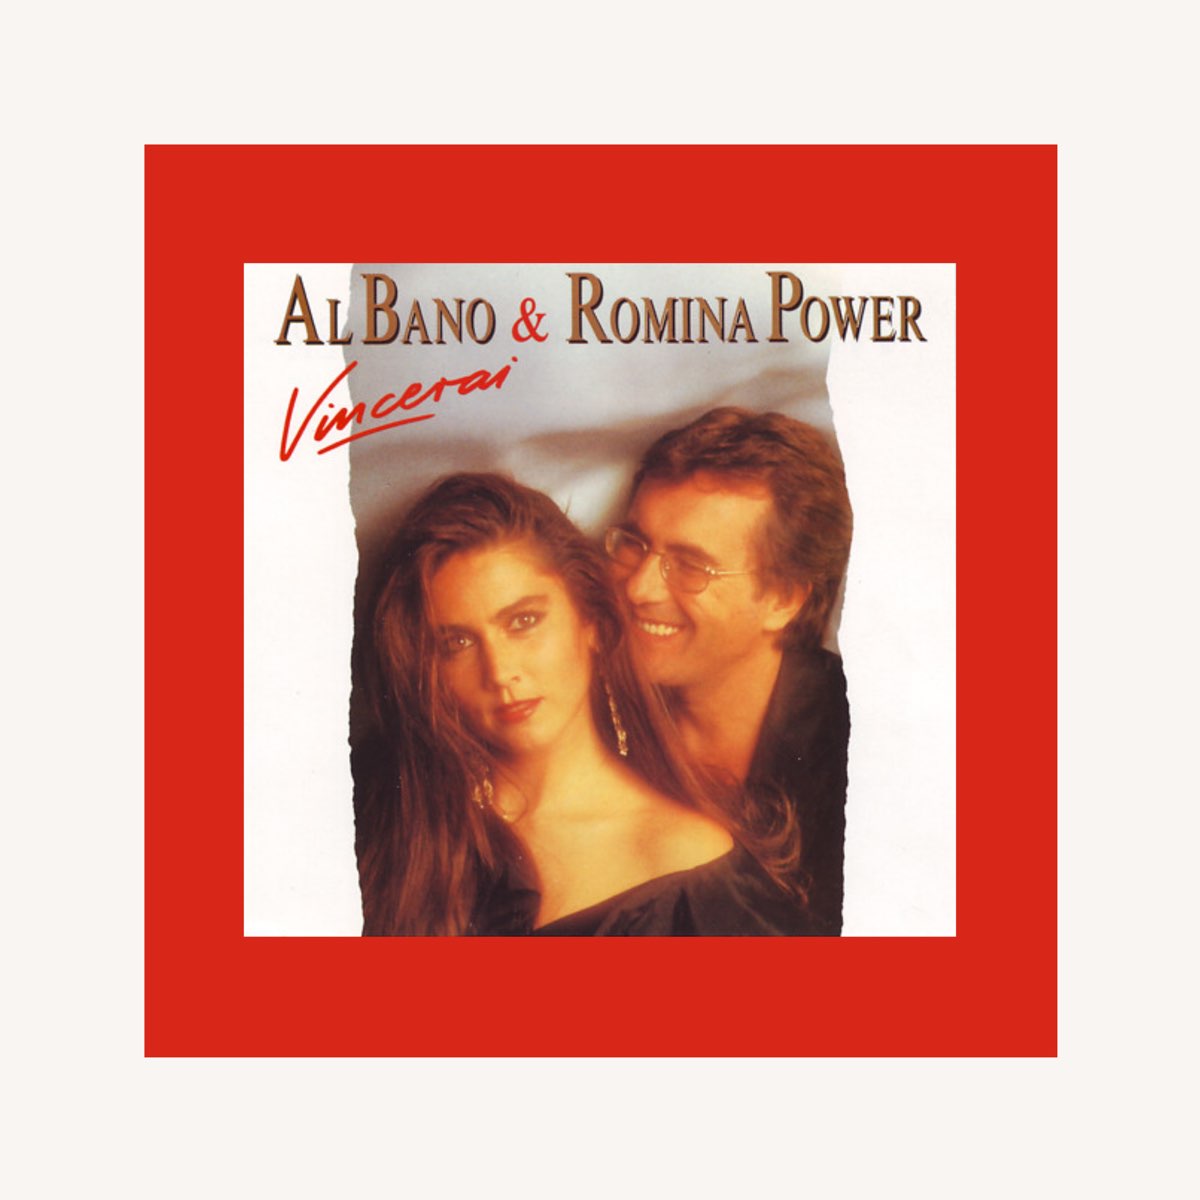 Ромина пауэр mp3. Al bano Romina Power sherazan. Al bano Romina Power CD Hits обложка обложка. Al bano Romina Power fragile. Постеры фото al bano and Romina Power.